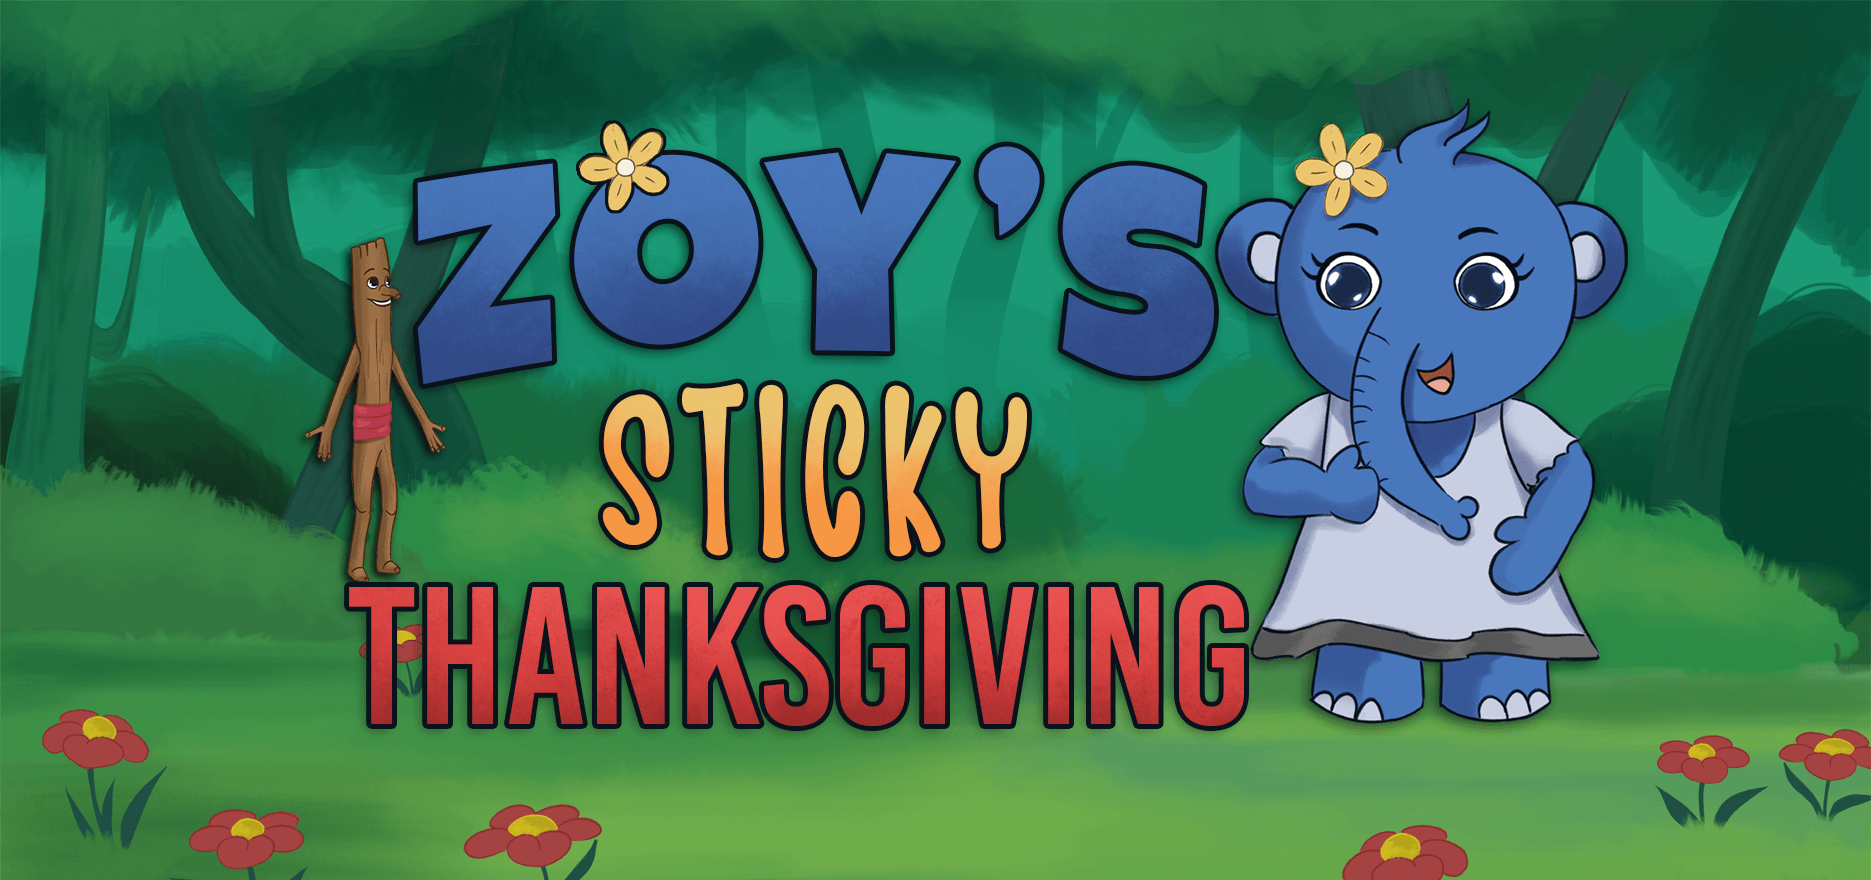 Zoy: Children’s Books App -  "Zoy's Sticky Thanksgiving" Teaser